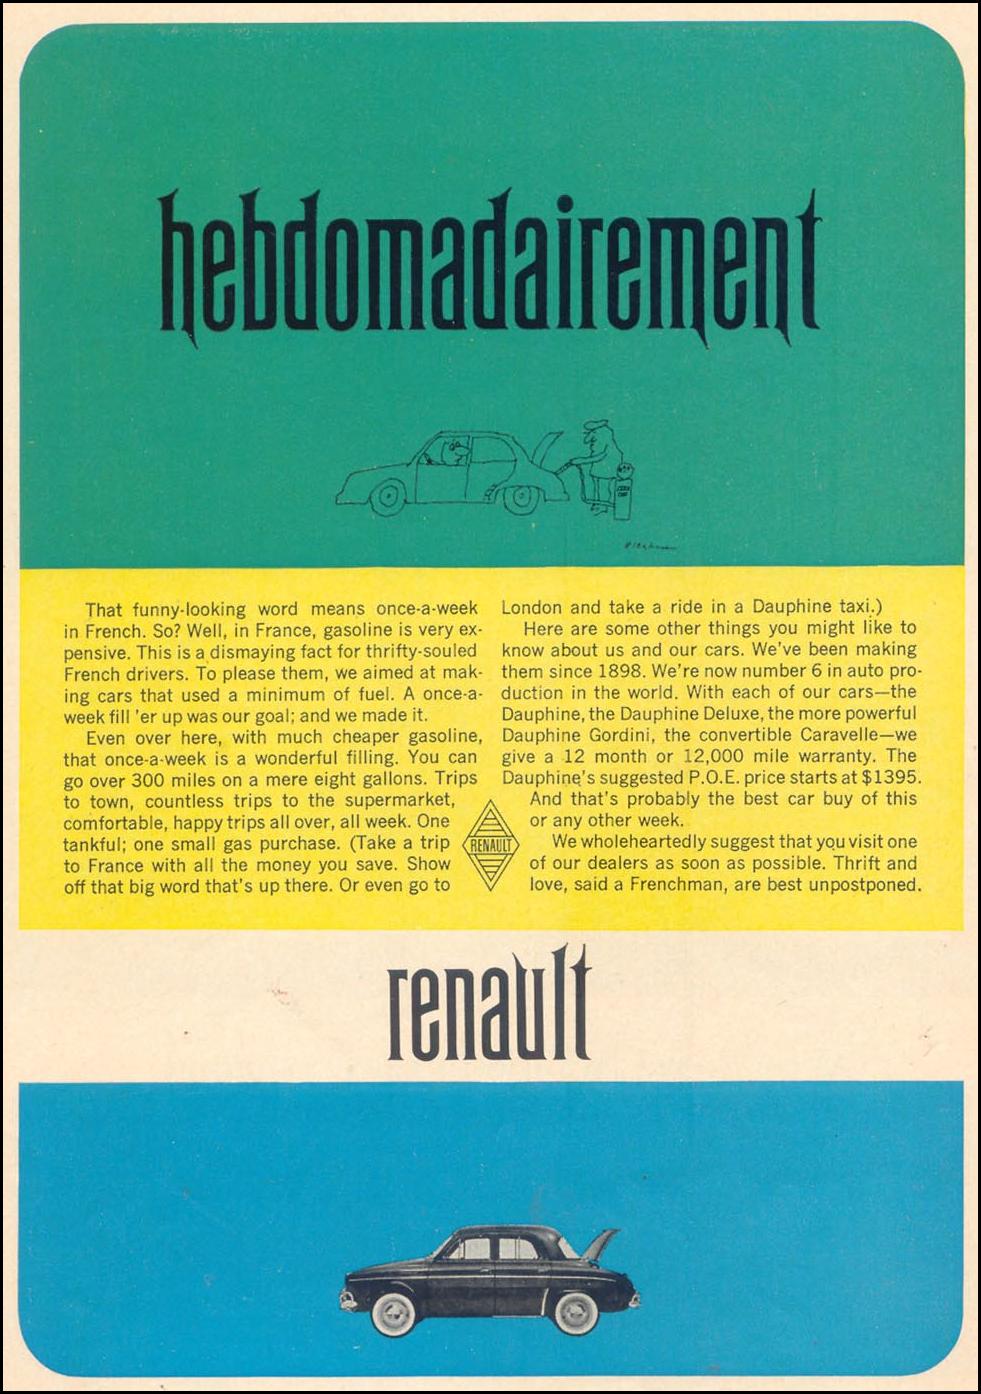 RENAULT AUTOMOBILES
TIME
02/23/1962
p. 17